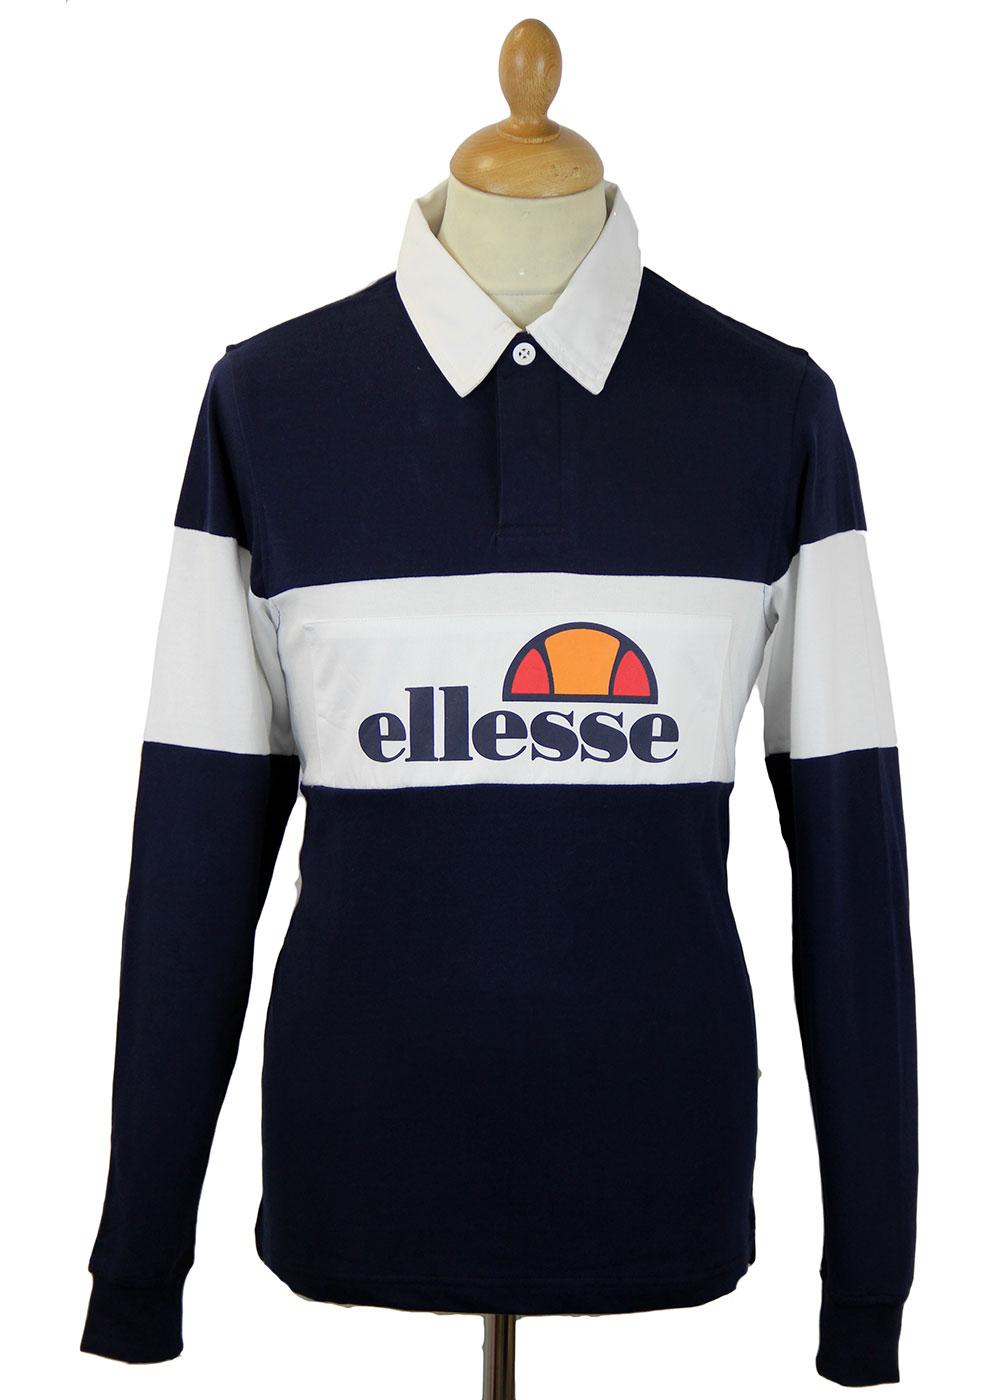 Campari ELLESSE Retro 1980s Rugby Stripe L/S Polo